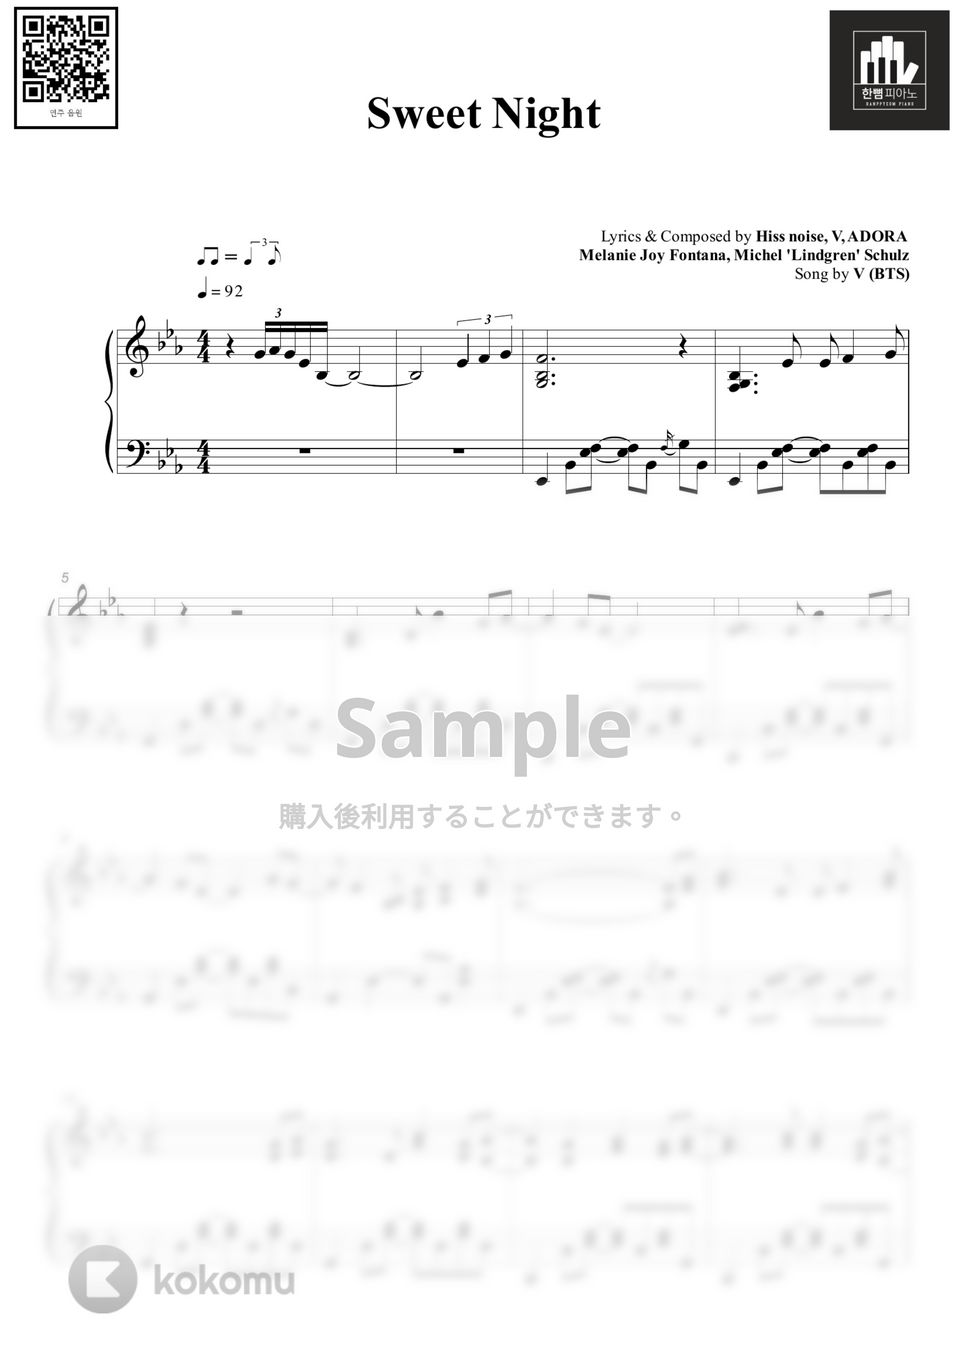 V (BTS) - Sweet Night (梨泰院クラス OST) by HANPPYEOMPIANO